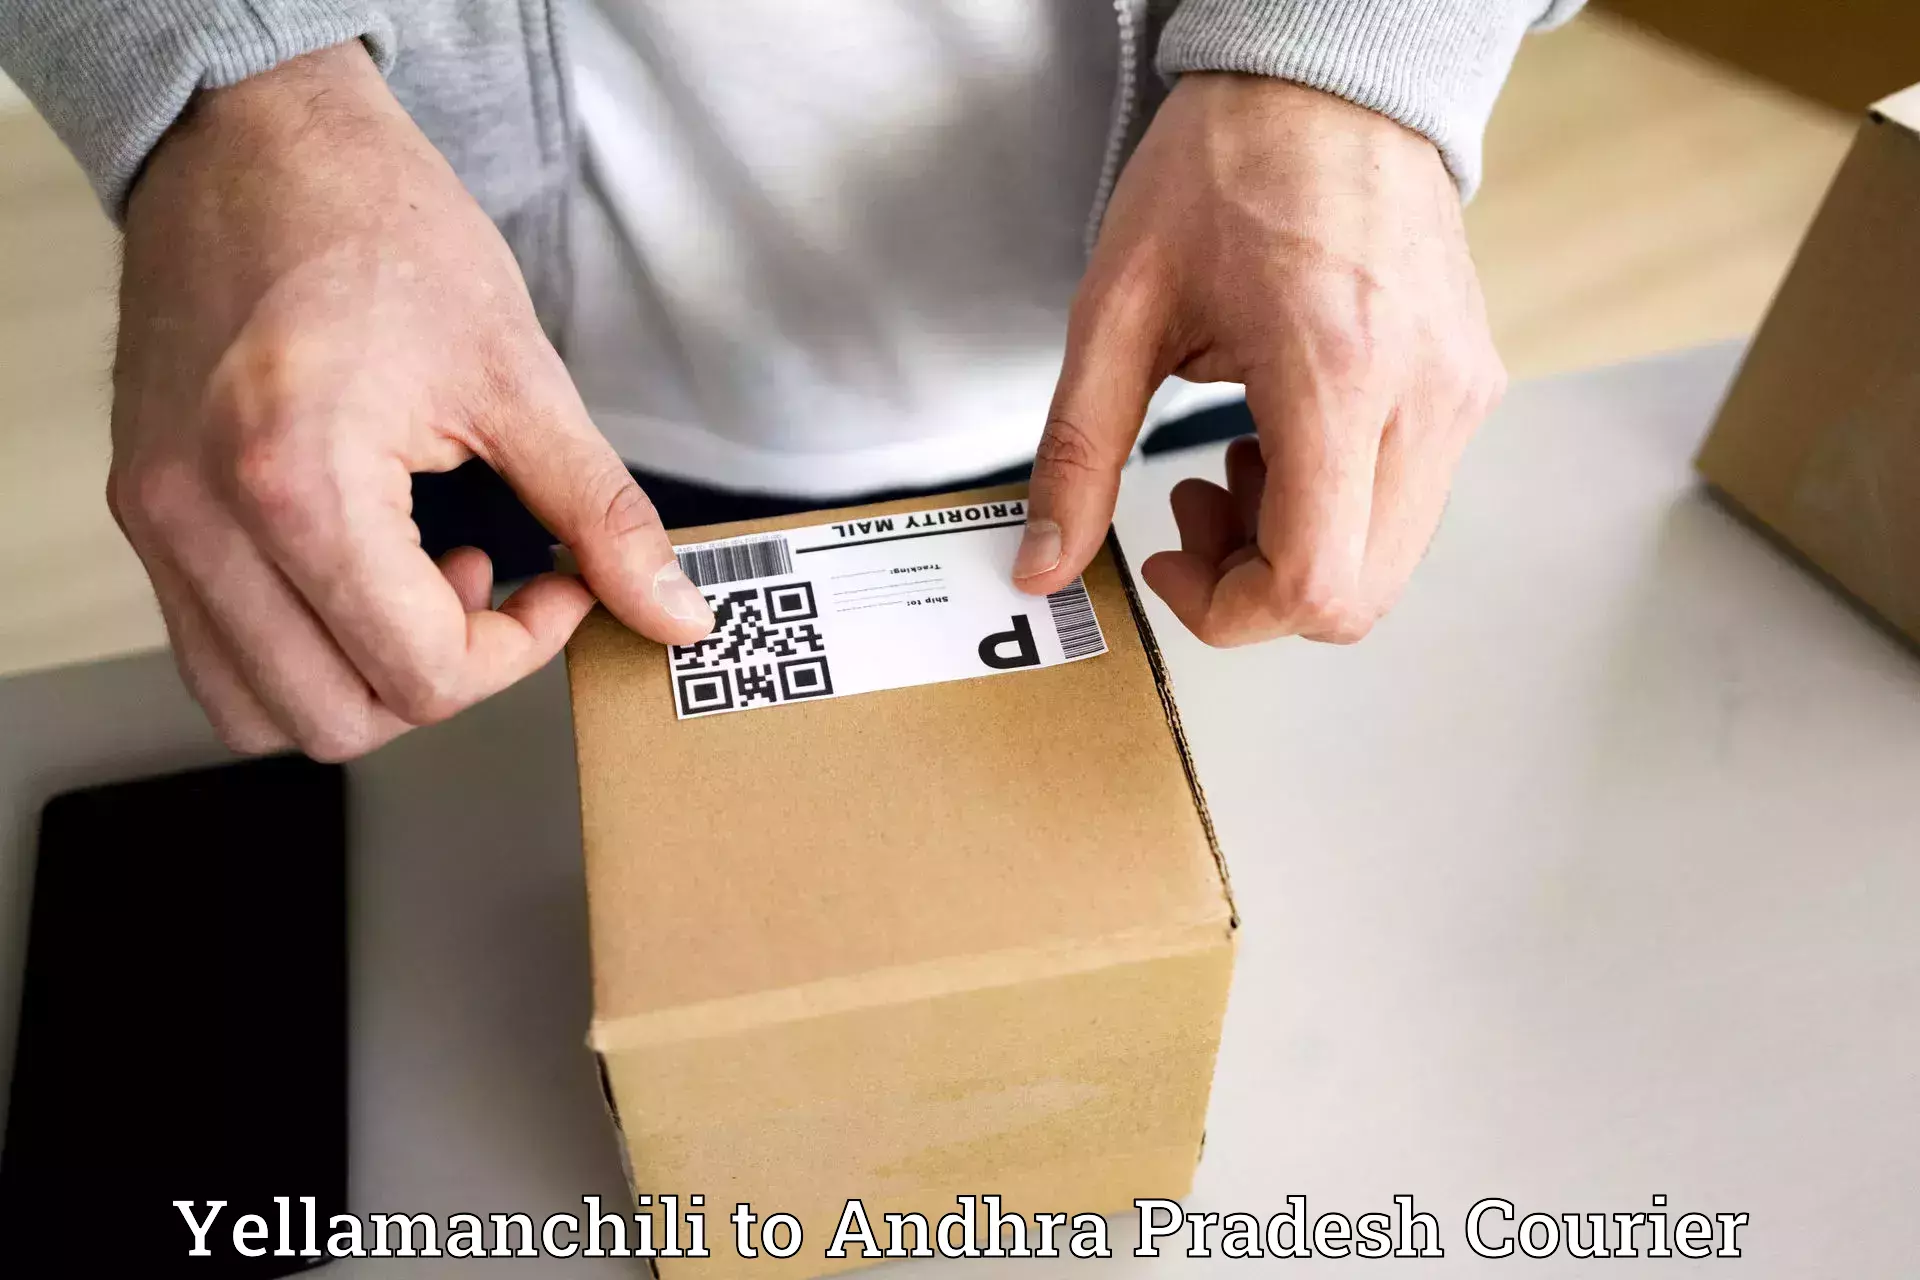 Wholesale parcel delivery in Yellamanchili to Srikakulam